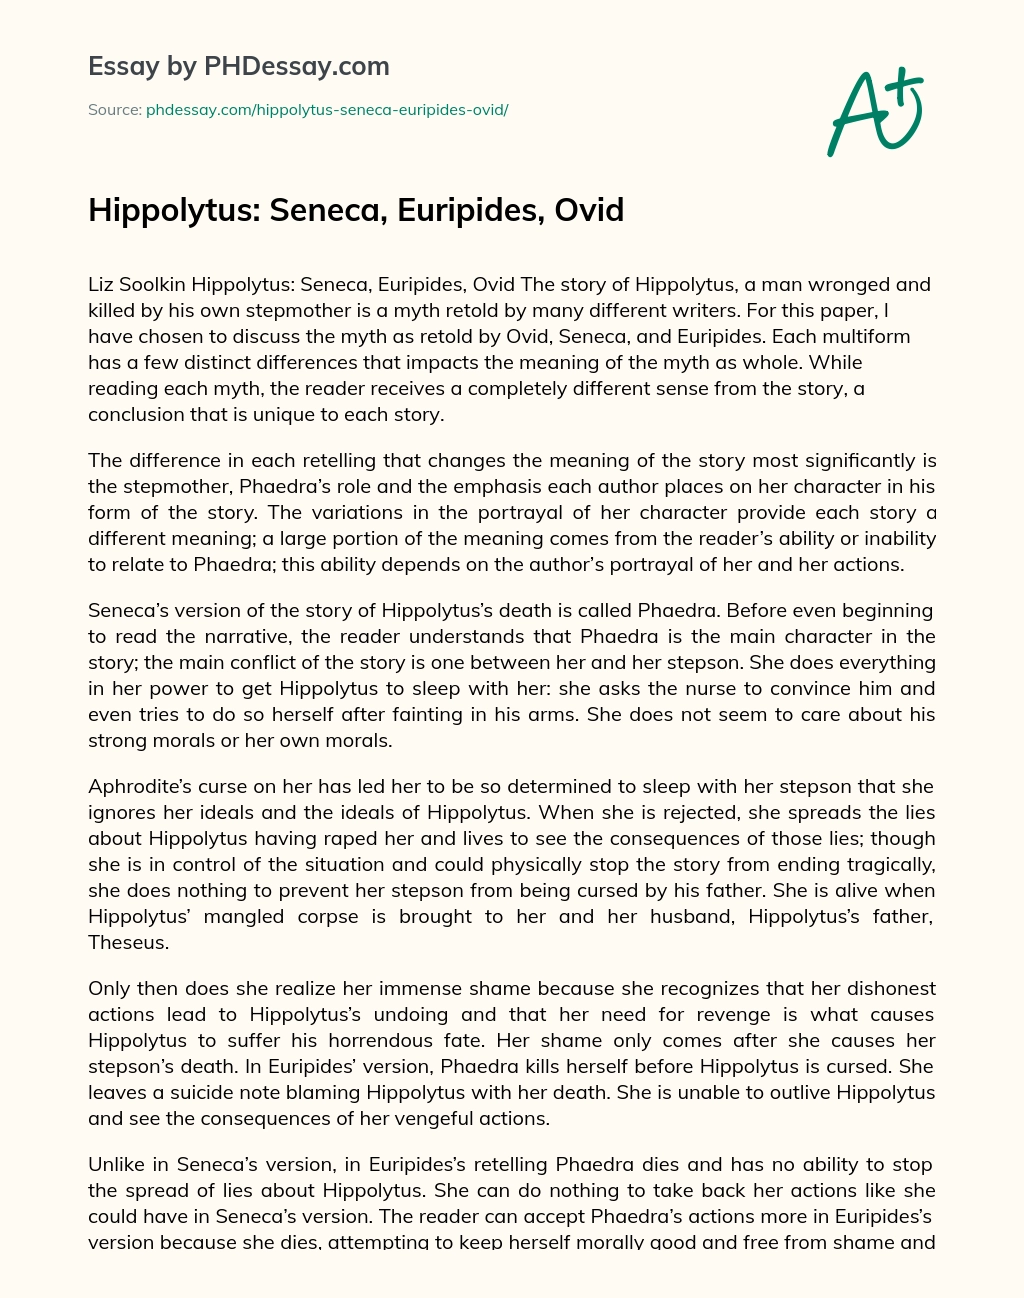 Hippolytus: Seneca, Euripides, Ovid essay